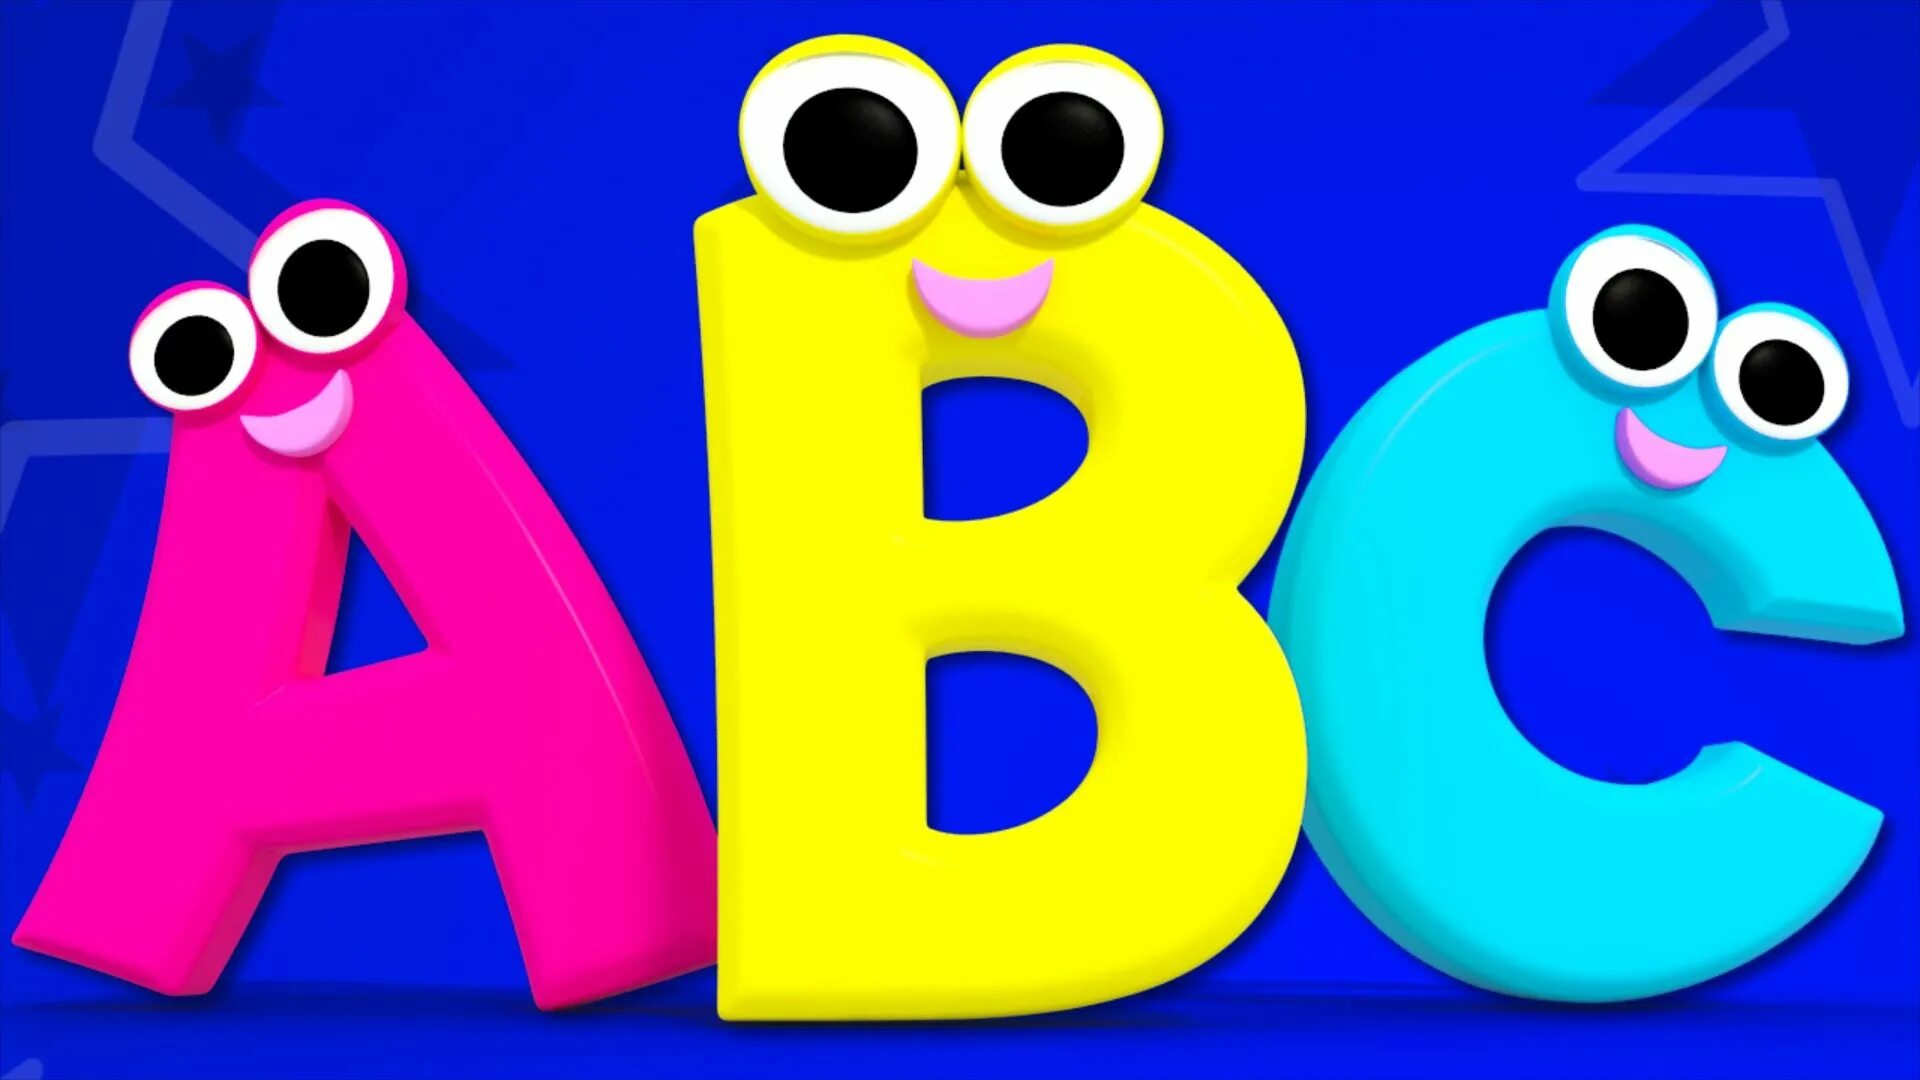 Ролик про английский. ABC картинка. ABC алфавит. Азбука английского языка обложка. Обложка для английской азбуки.